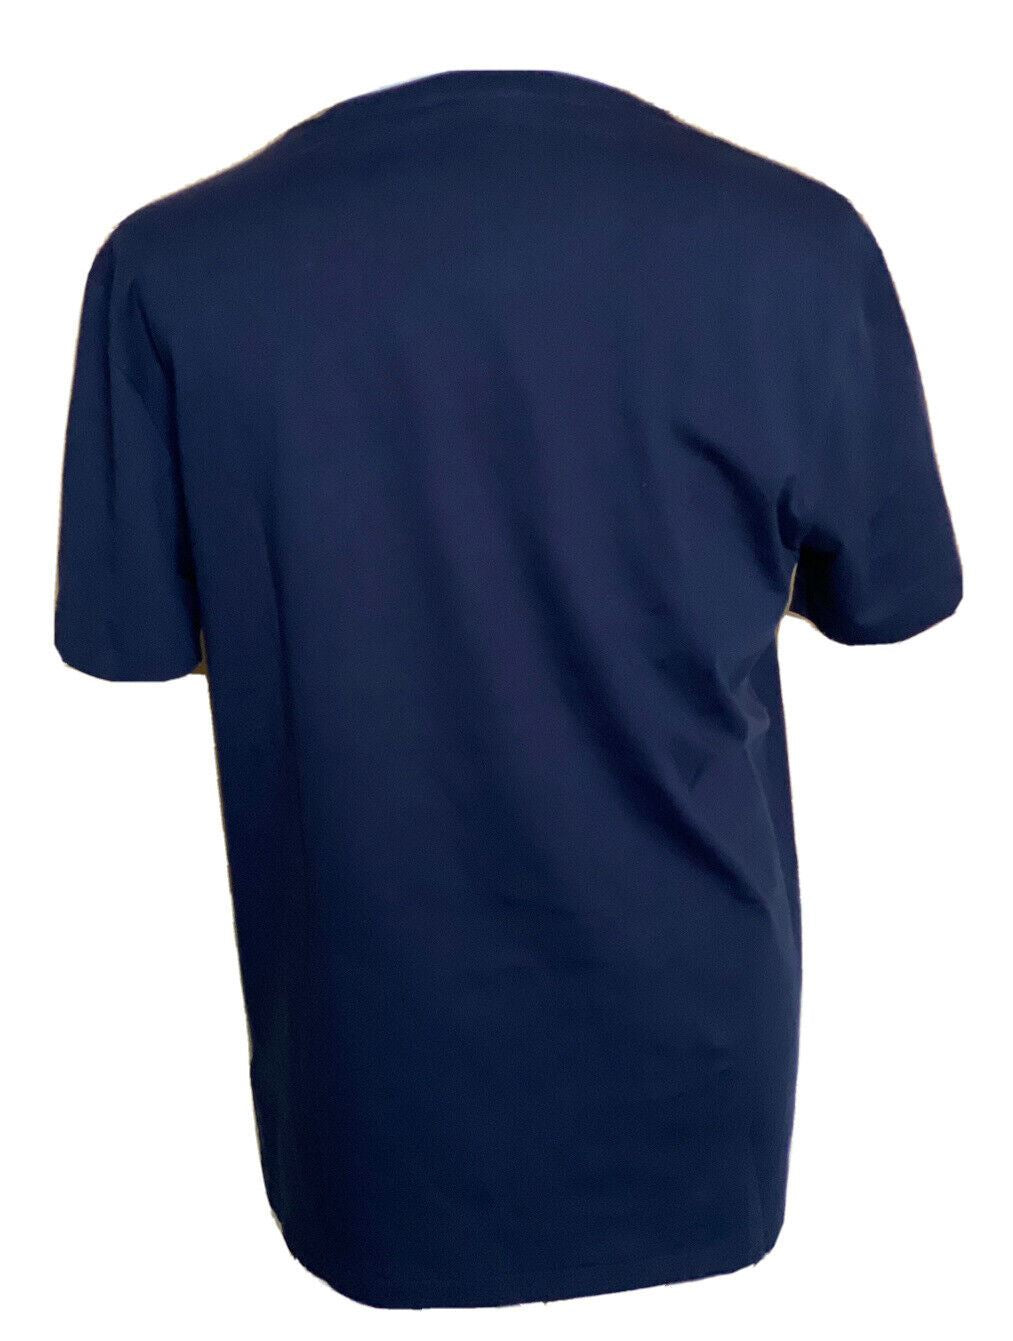 Neu mit Etikett: Polo Ralph Lauren NY P-Wing Kurzarm-Logo-T-Shirt, Blau, Größe L 